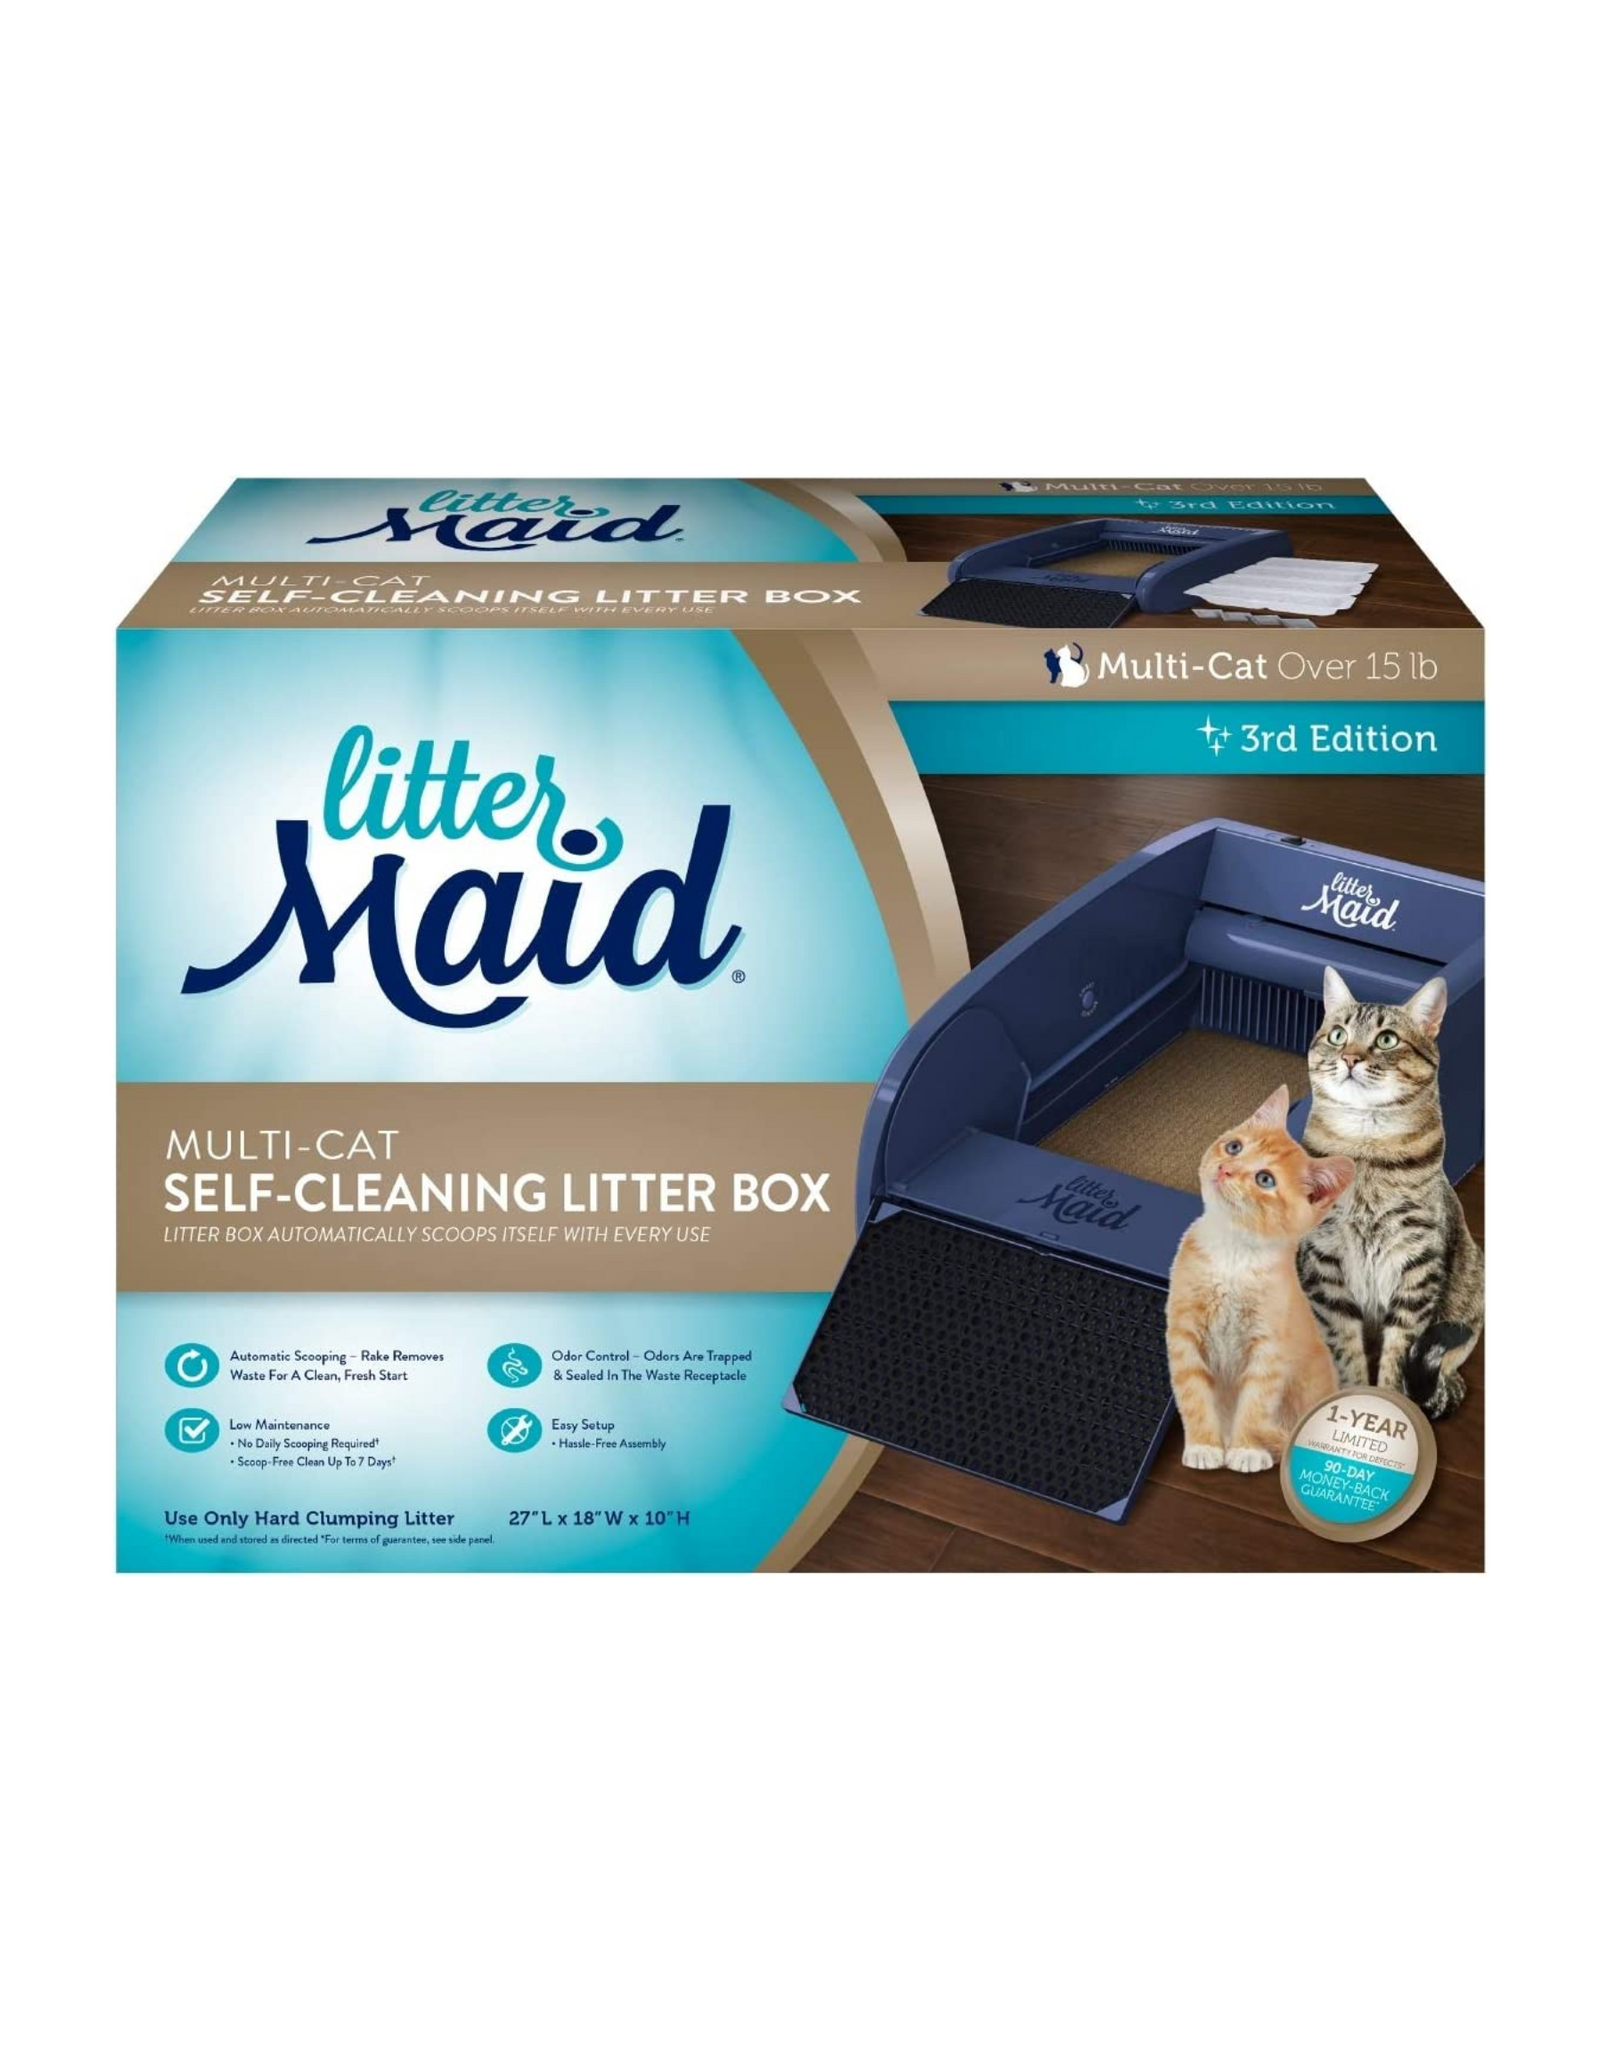 Littermaid LM980 Mega Self-Cleaning Litter Box 3.1 Version